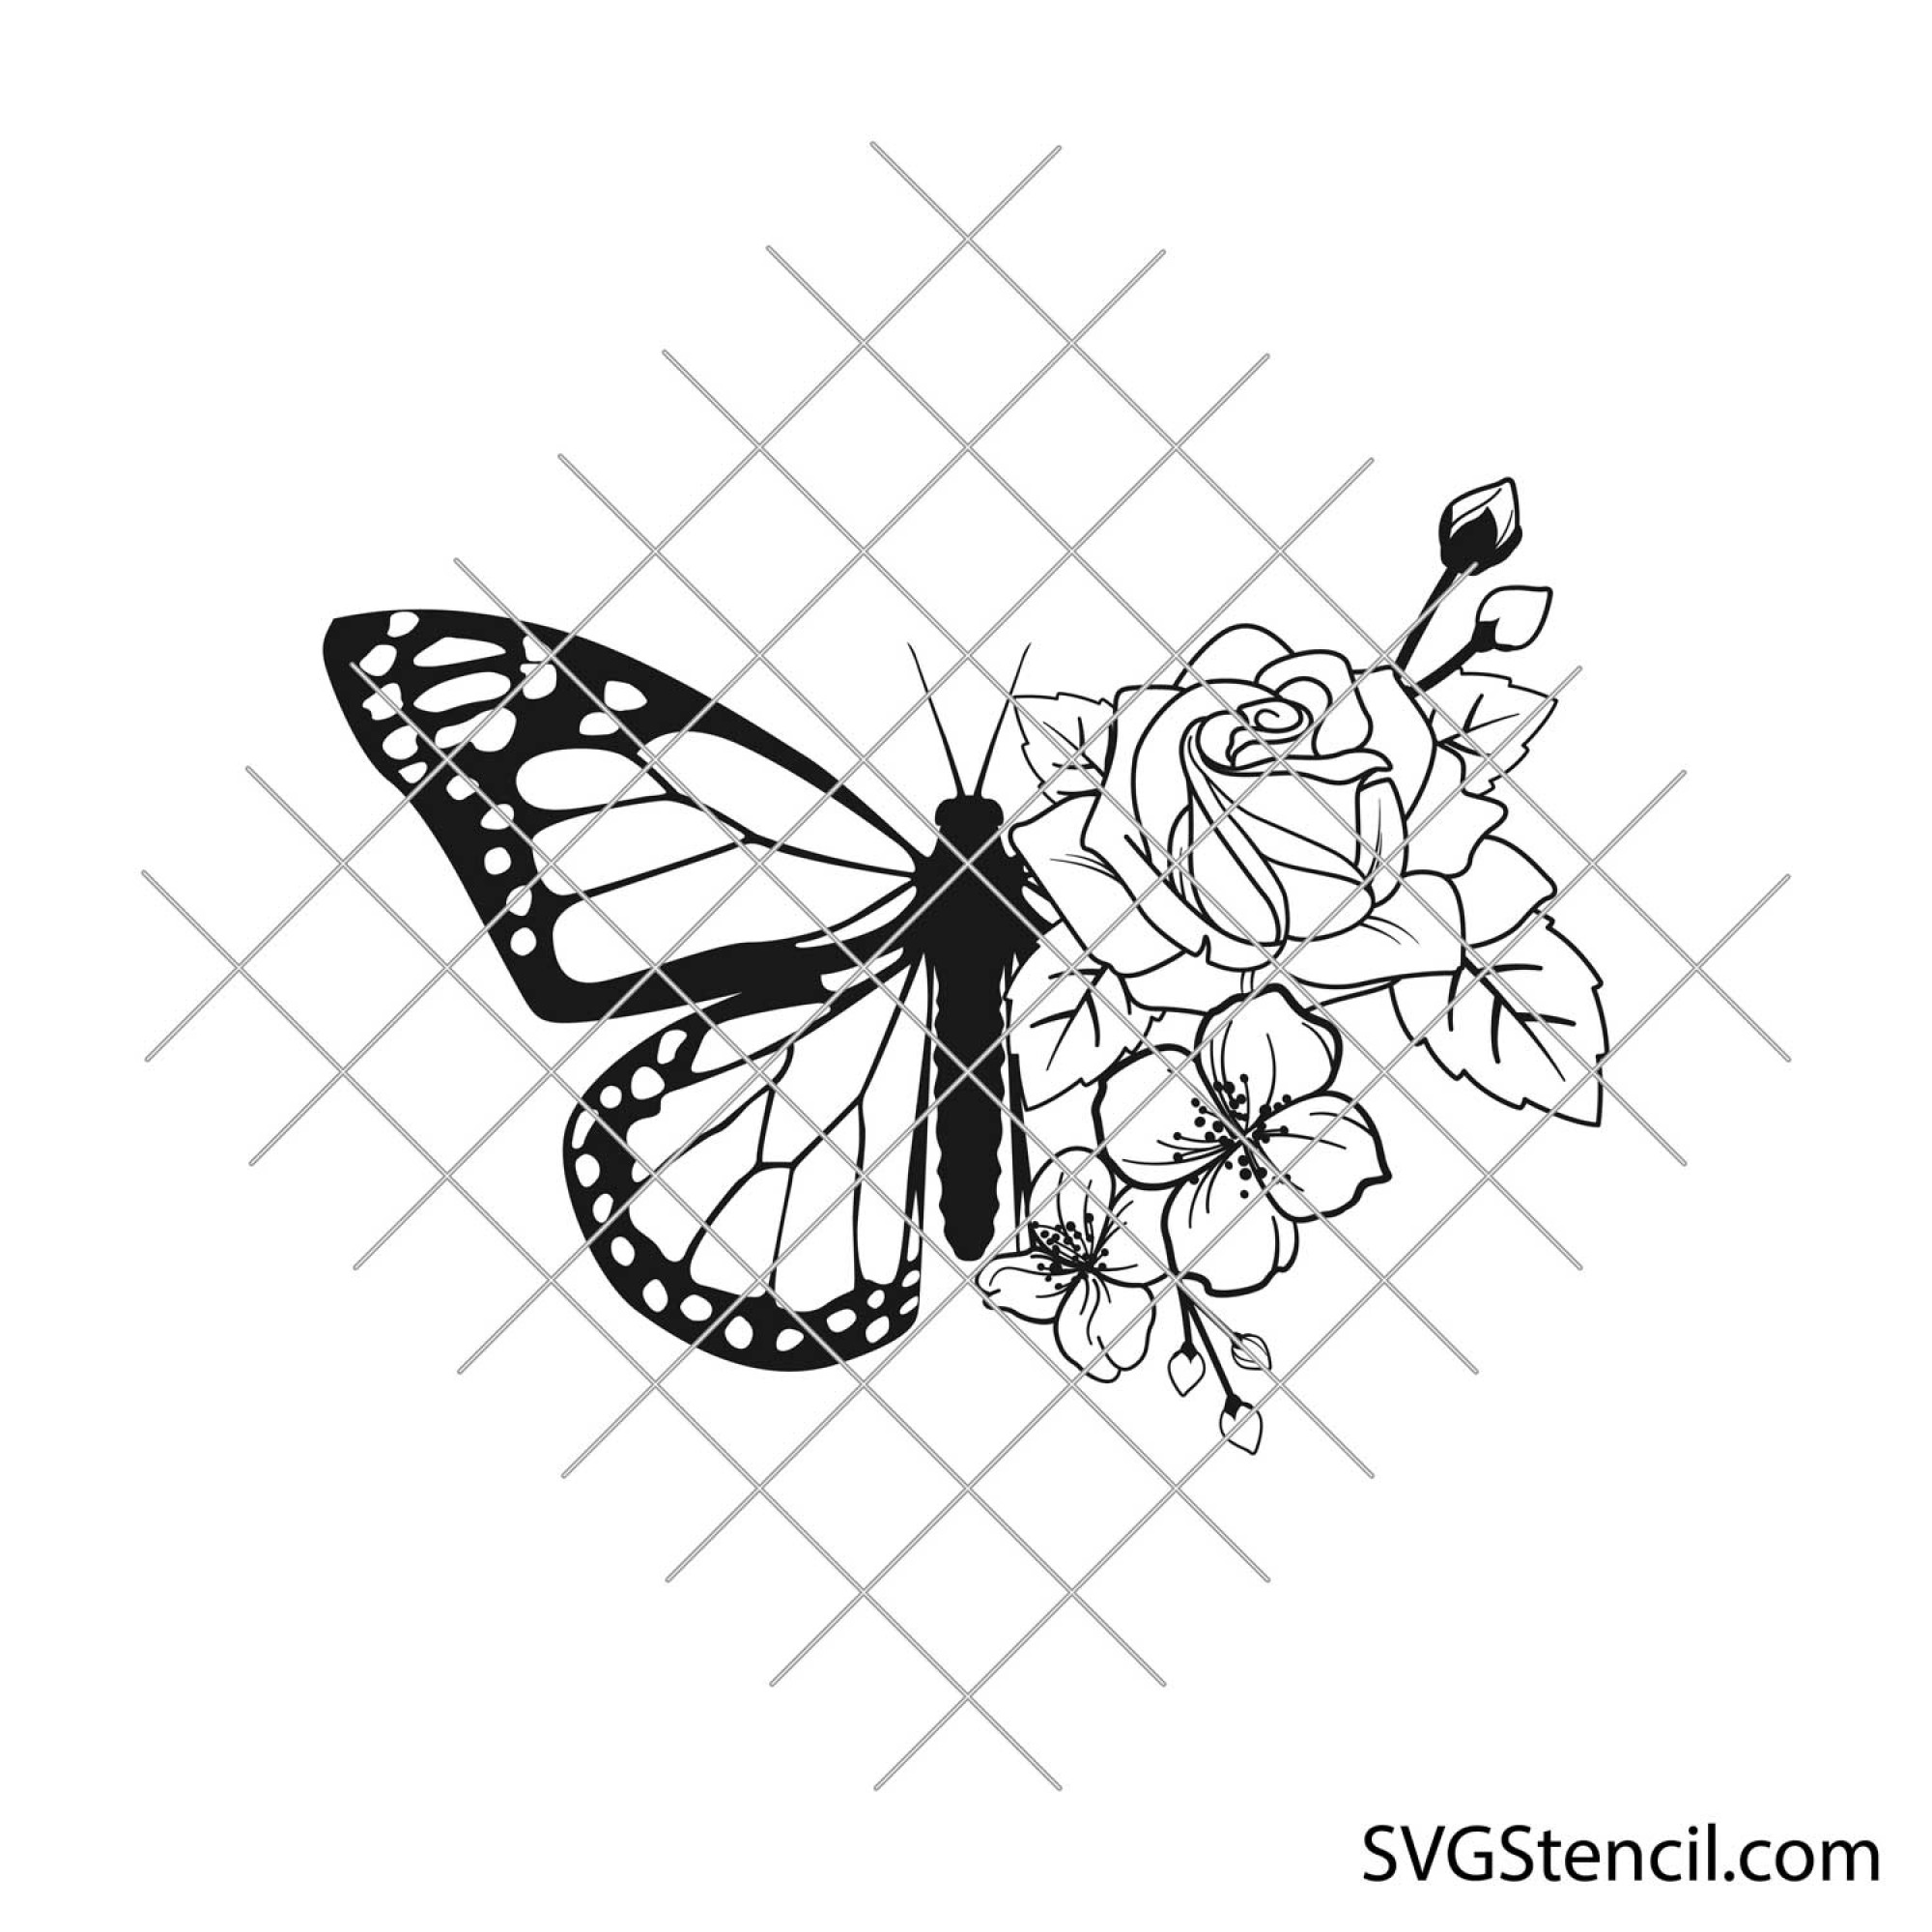 Half Butterfly and Half Flowers Tattoo Design Stencil/tattoo Template  Floral Butterfly Tattoo Instant Digital Download Tattoo Permit - Etsy |  Flower tattoo designs, Butterfly tattoo designs, Violet flower tattoos